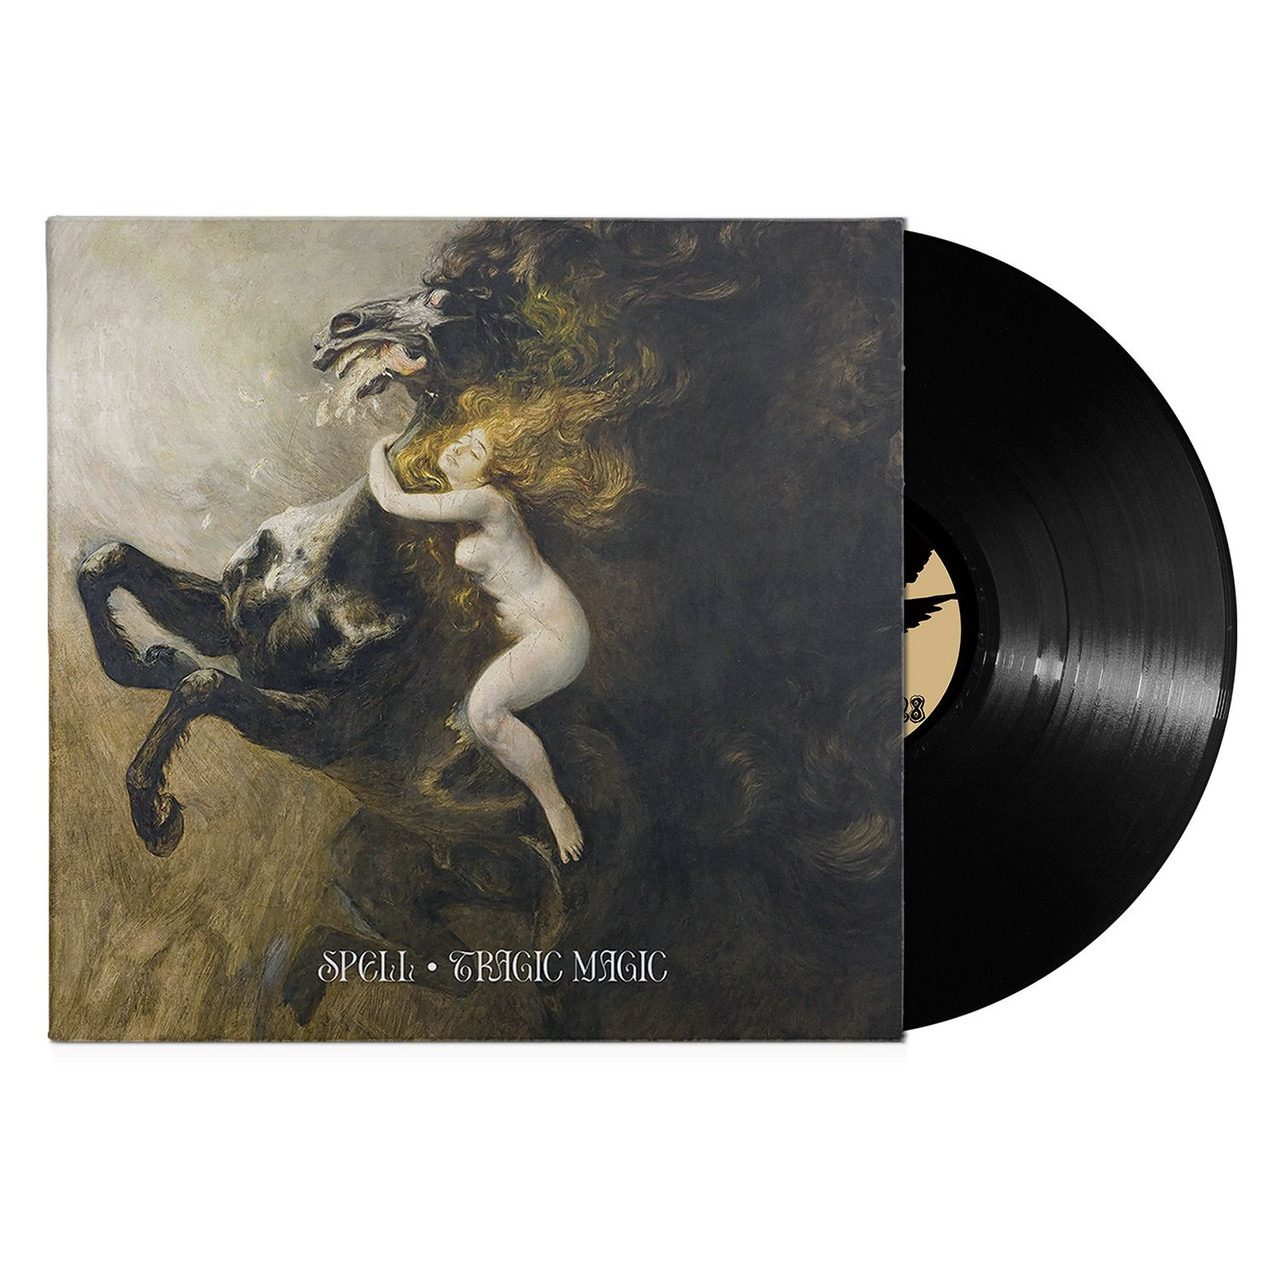 PRE-ORDER - Spell 'Tragic Magic' LP 180g Black Vinyl - RELEASE DATE 28th October 2022